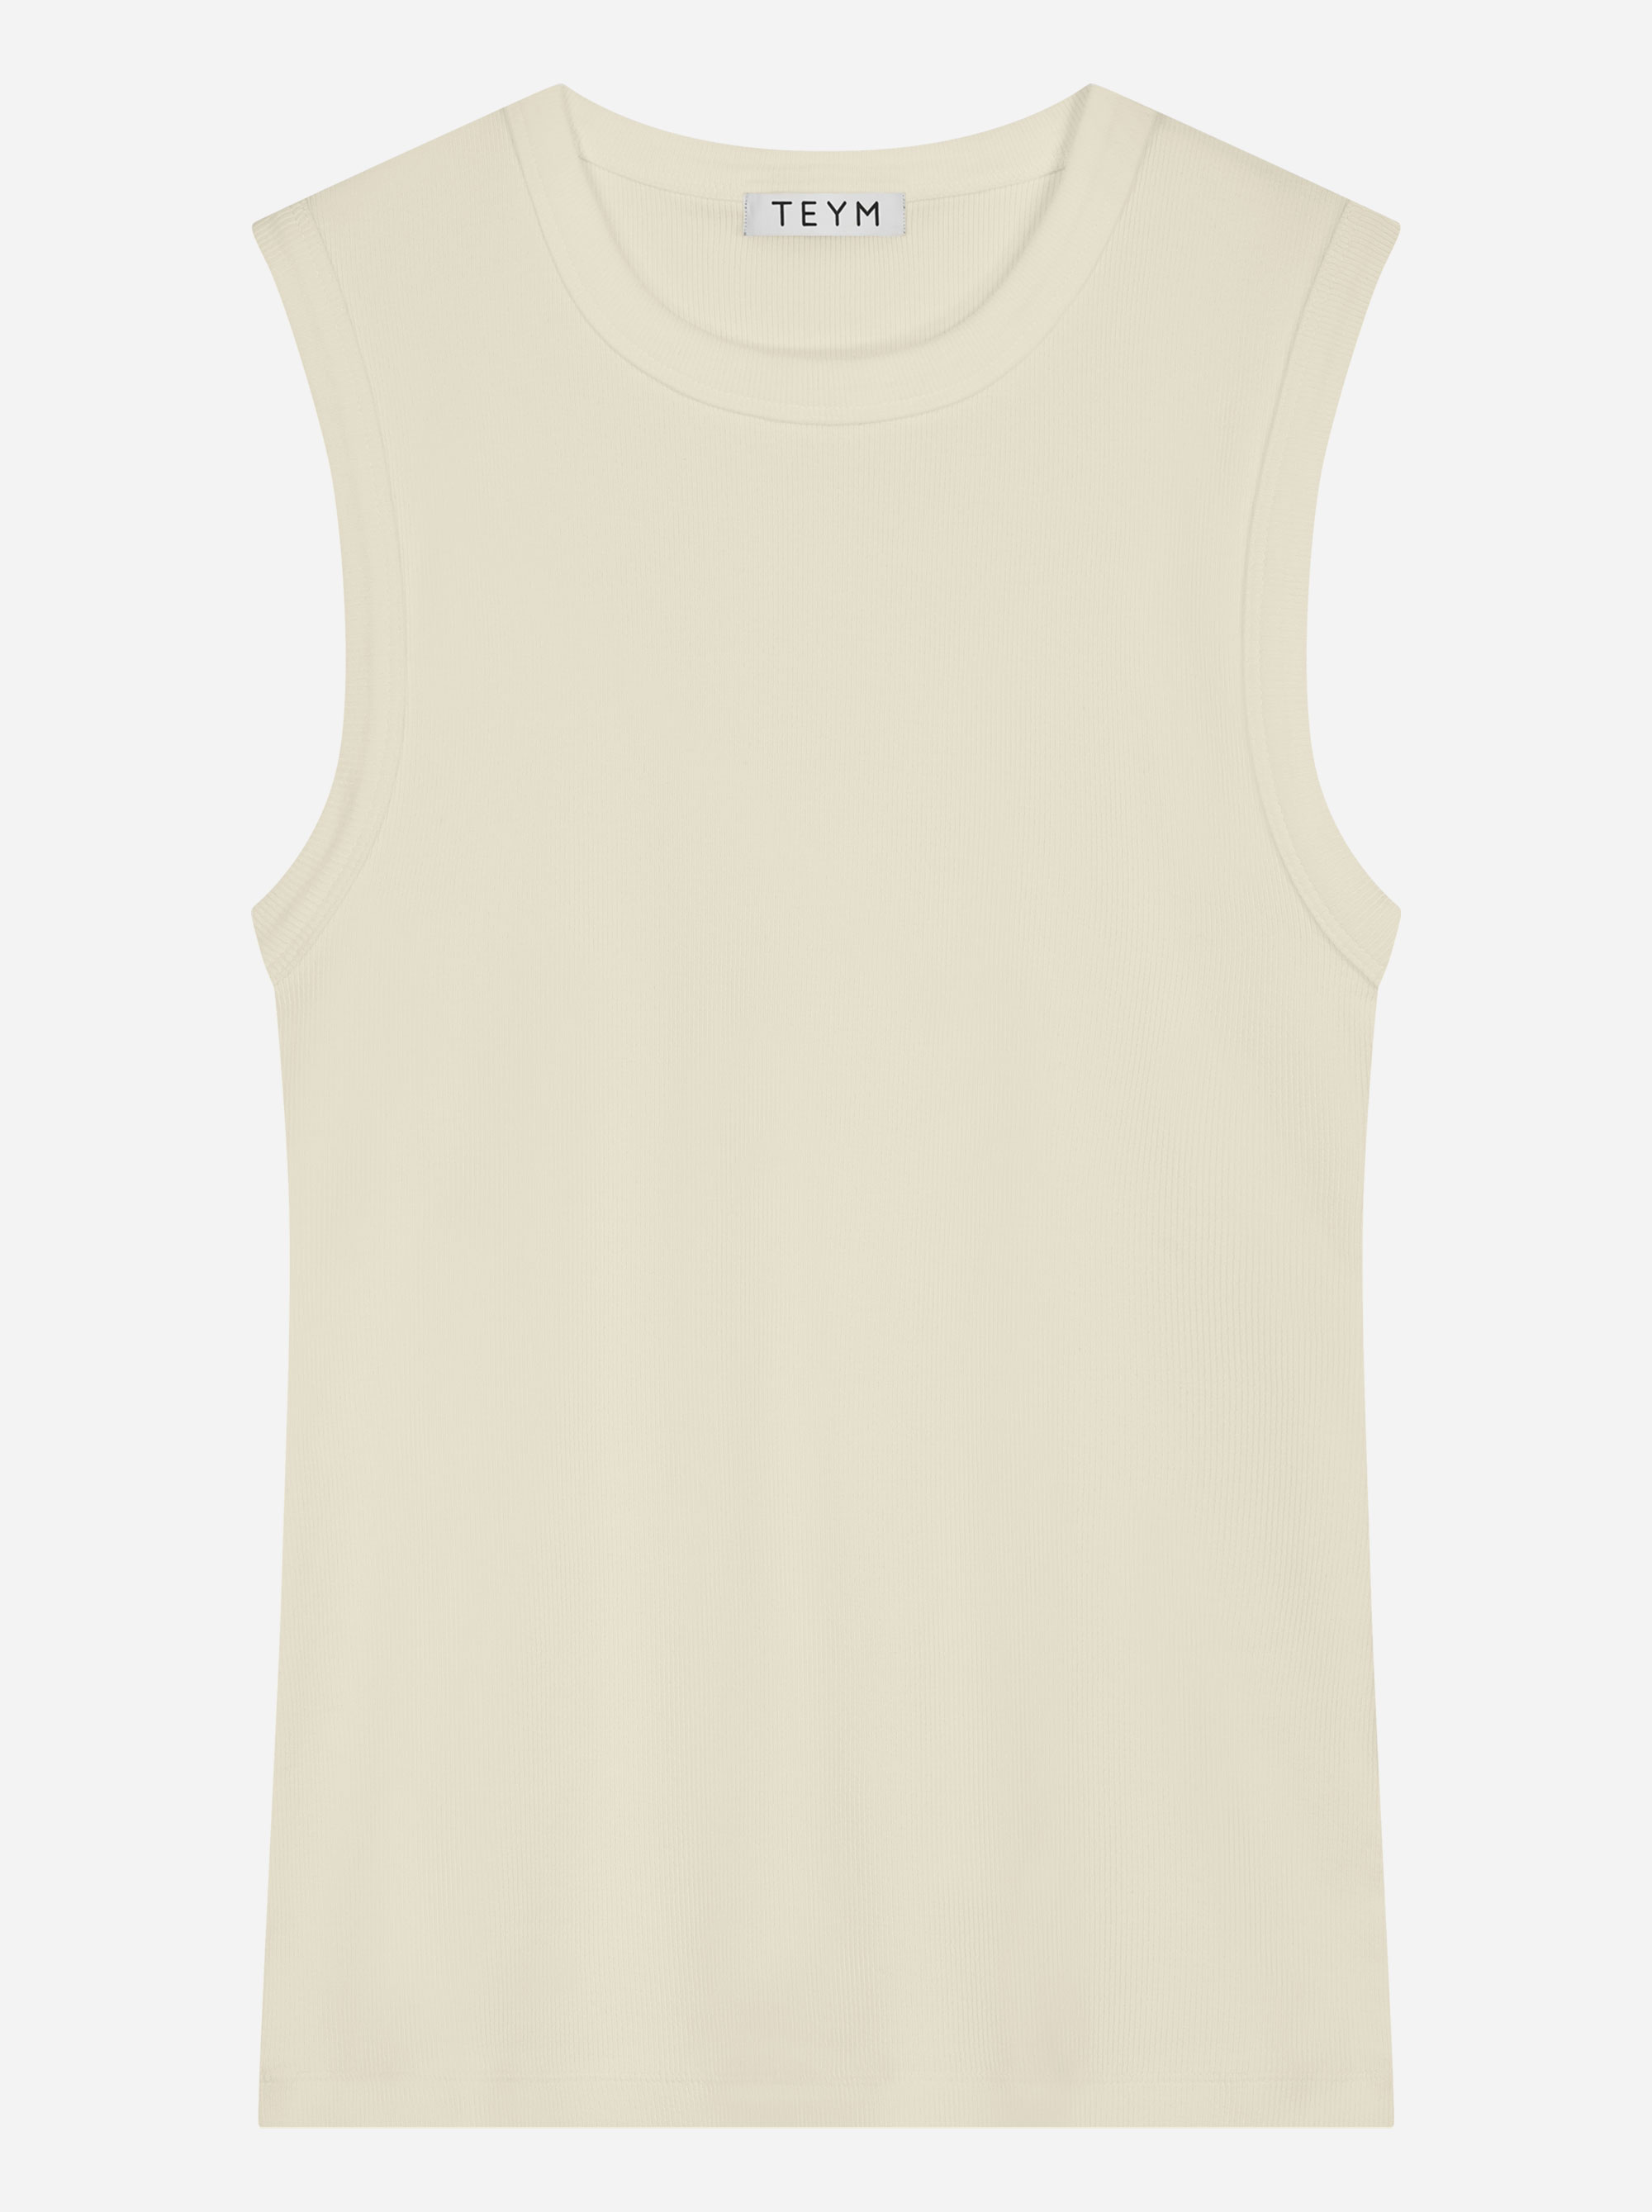 Teym - The Sleeveless T-Shirt - Women - Off-White